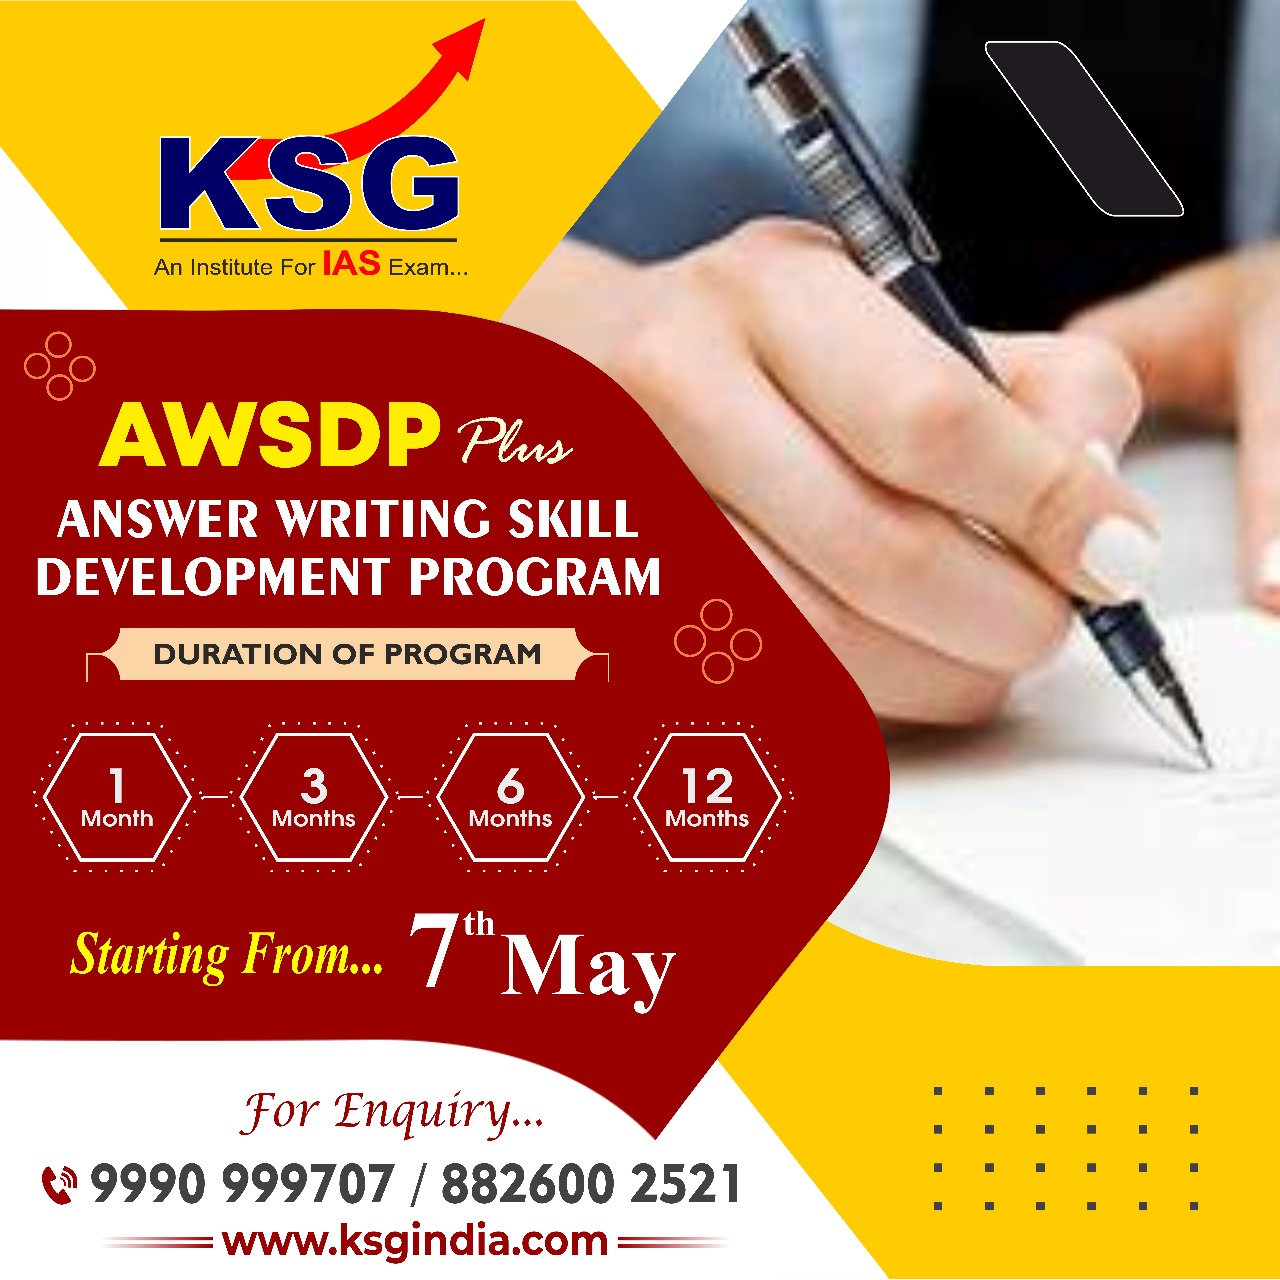 Answer Writing Course - AWSDP